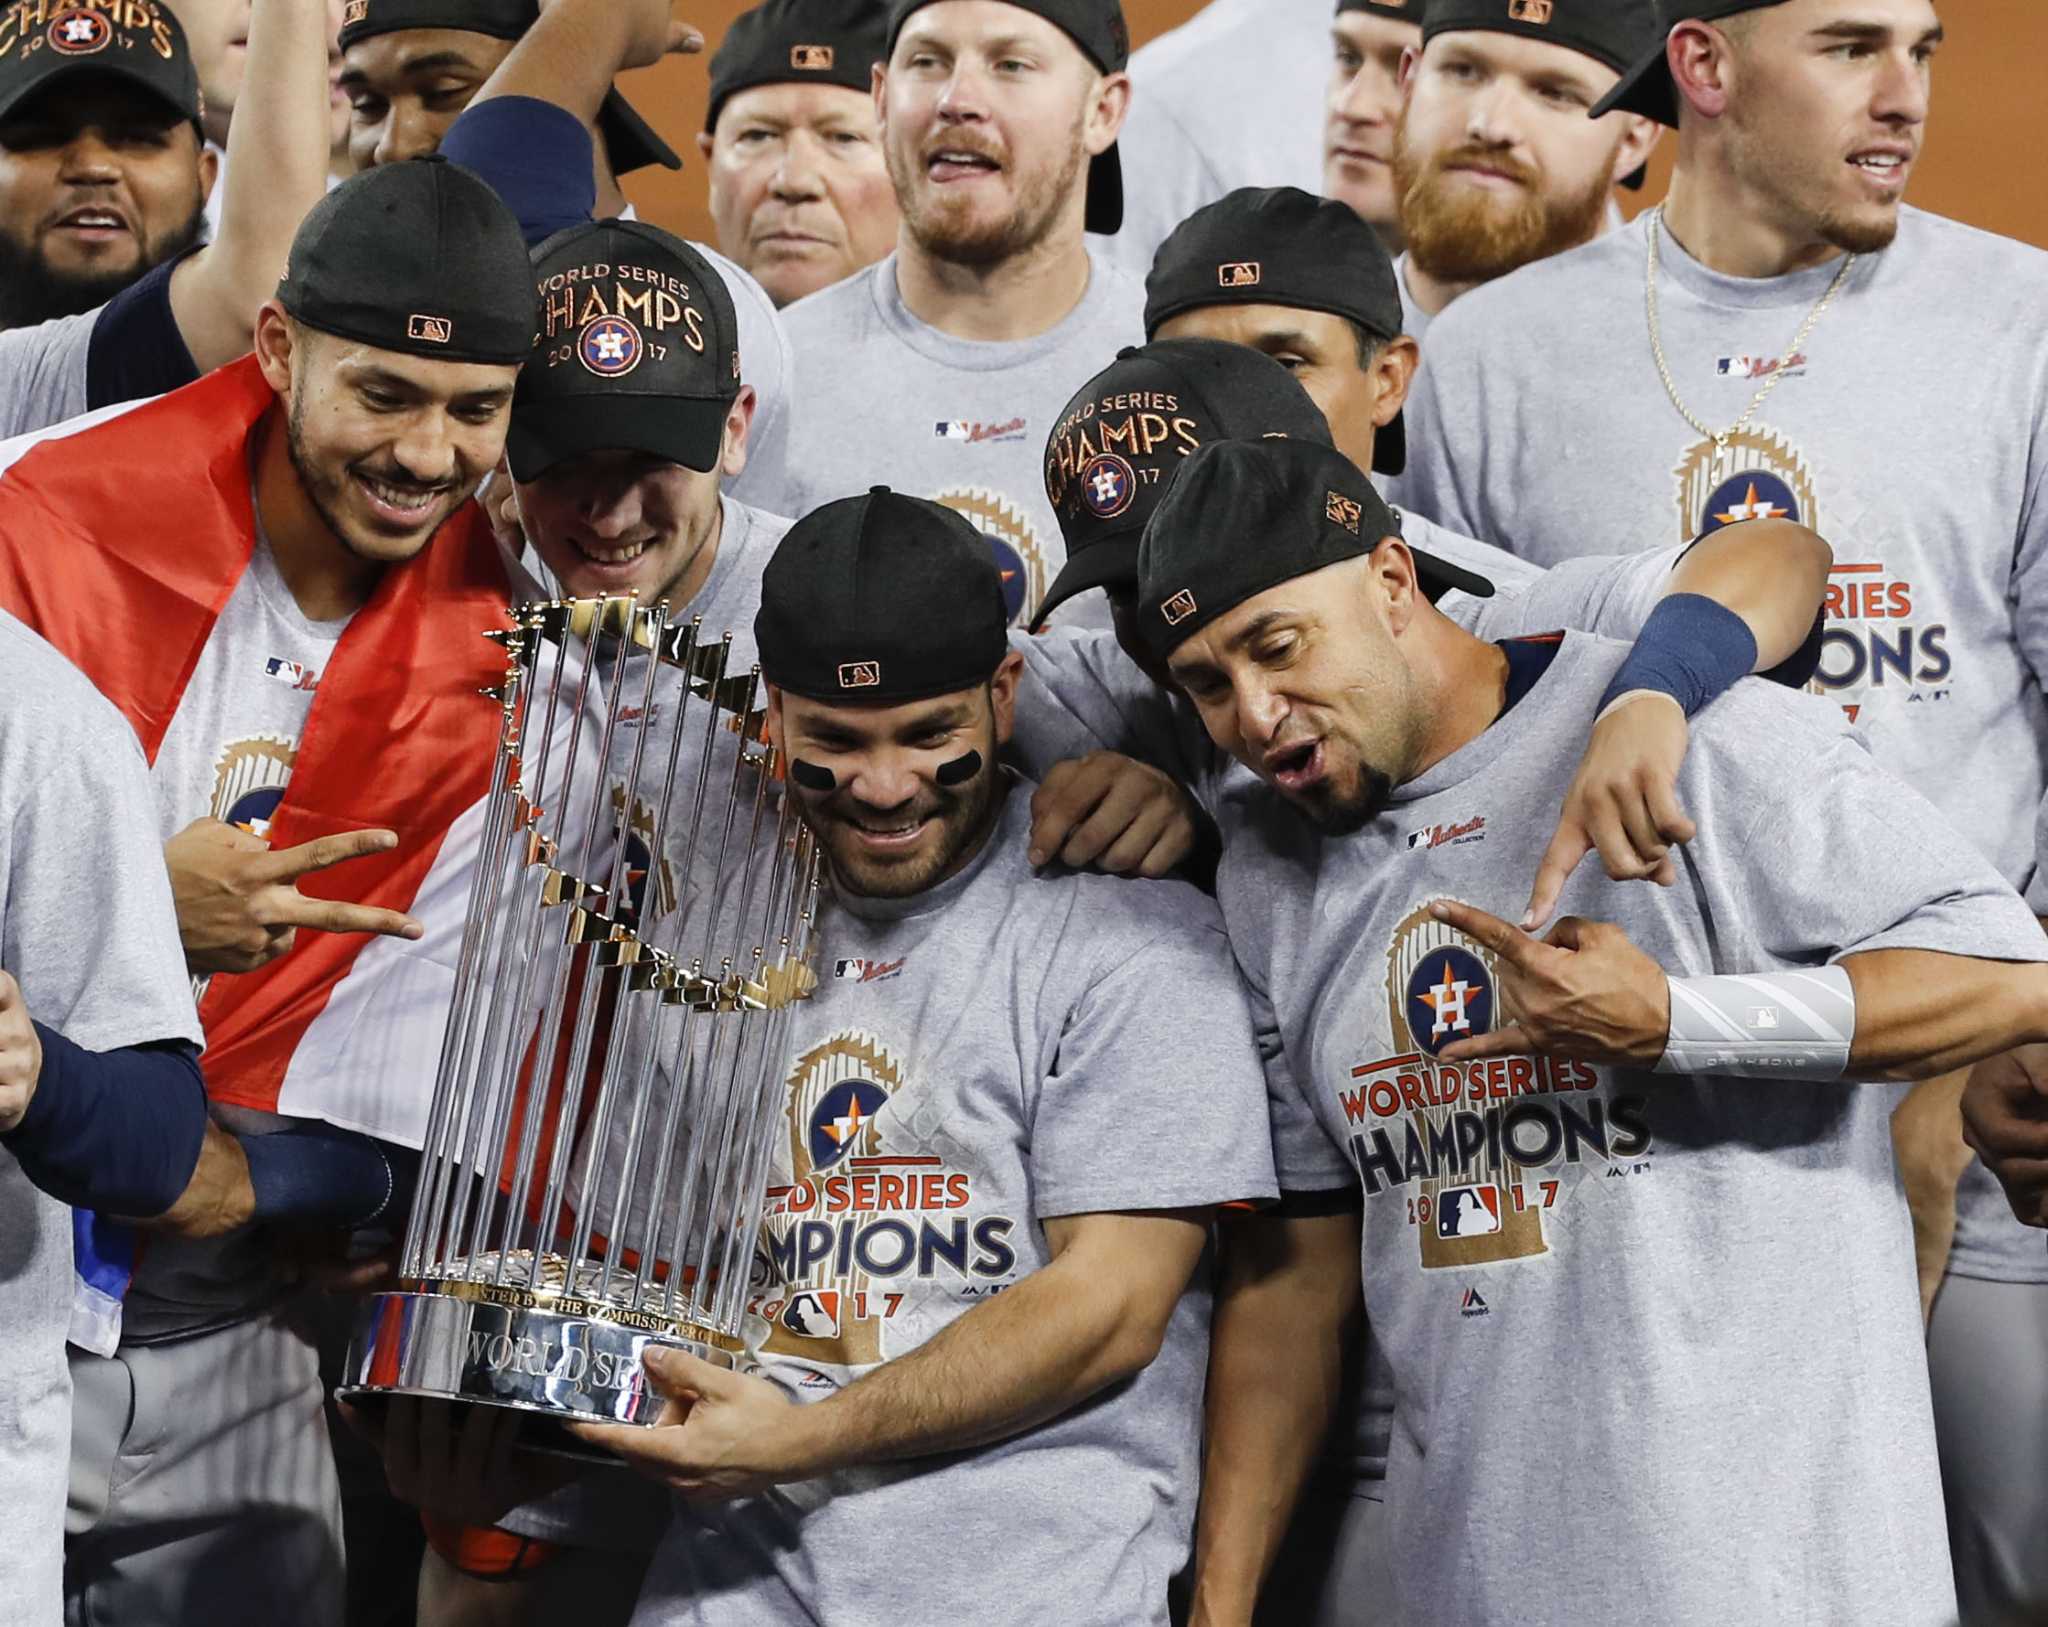 Watch 2017 World Series Champions: Houston Astros